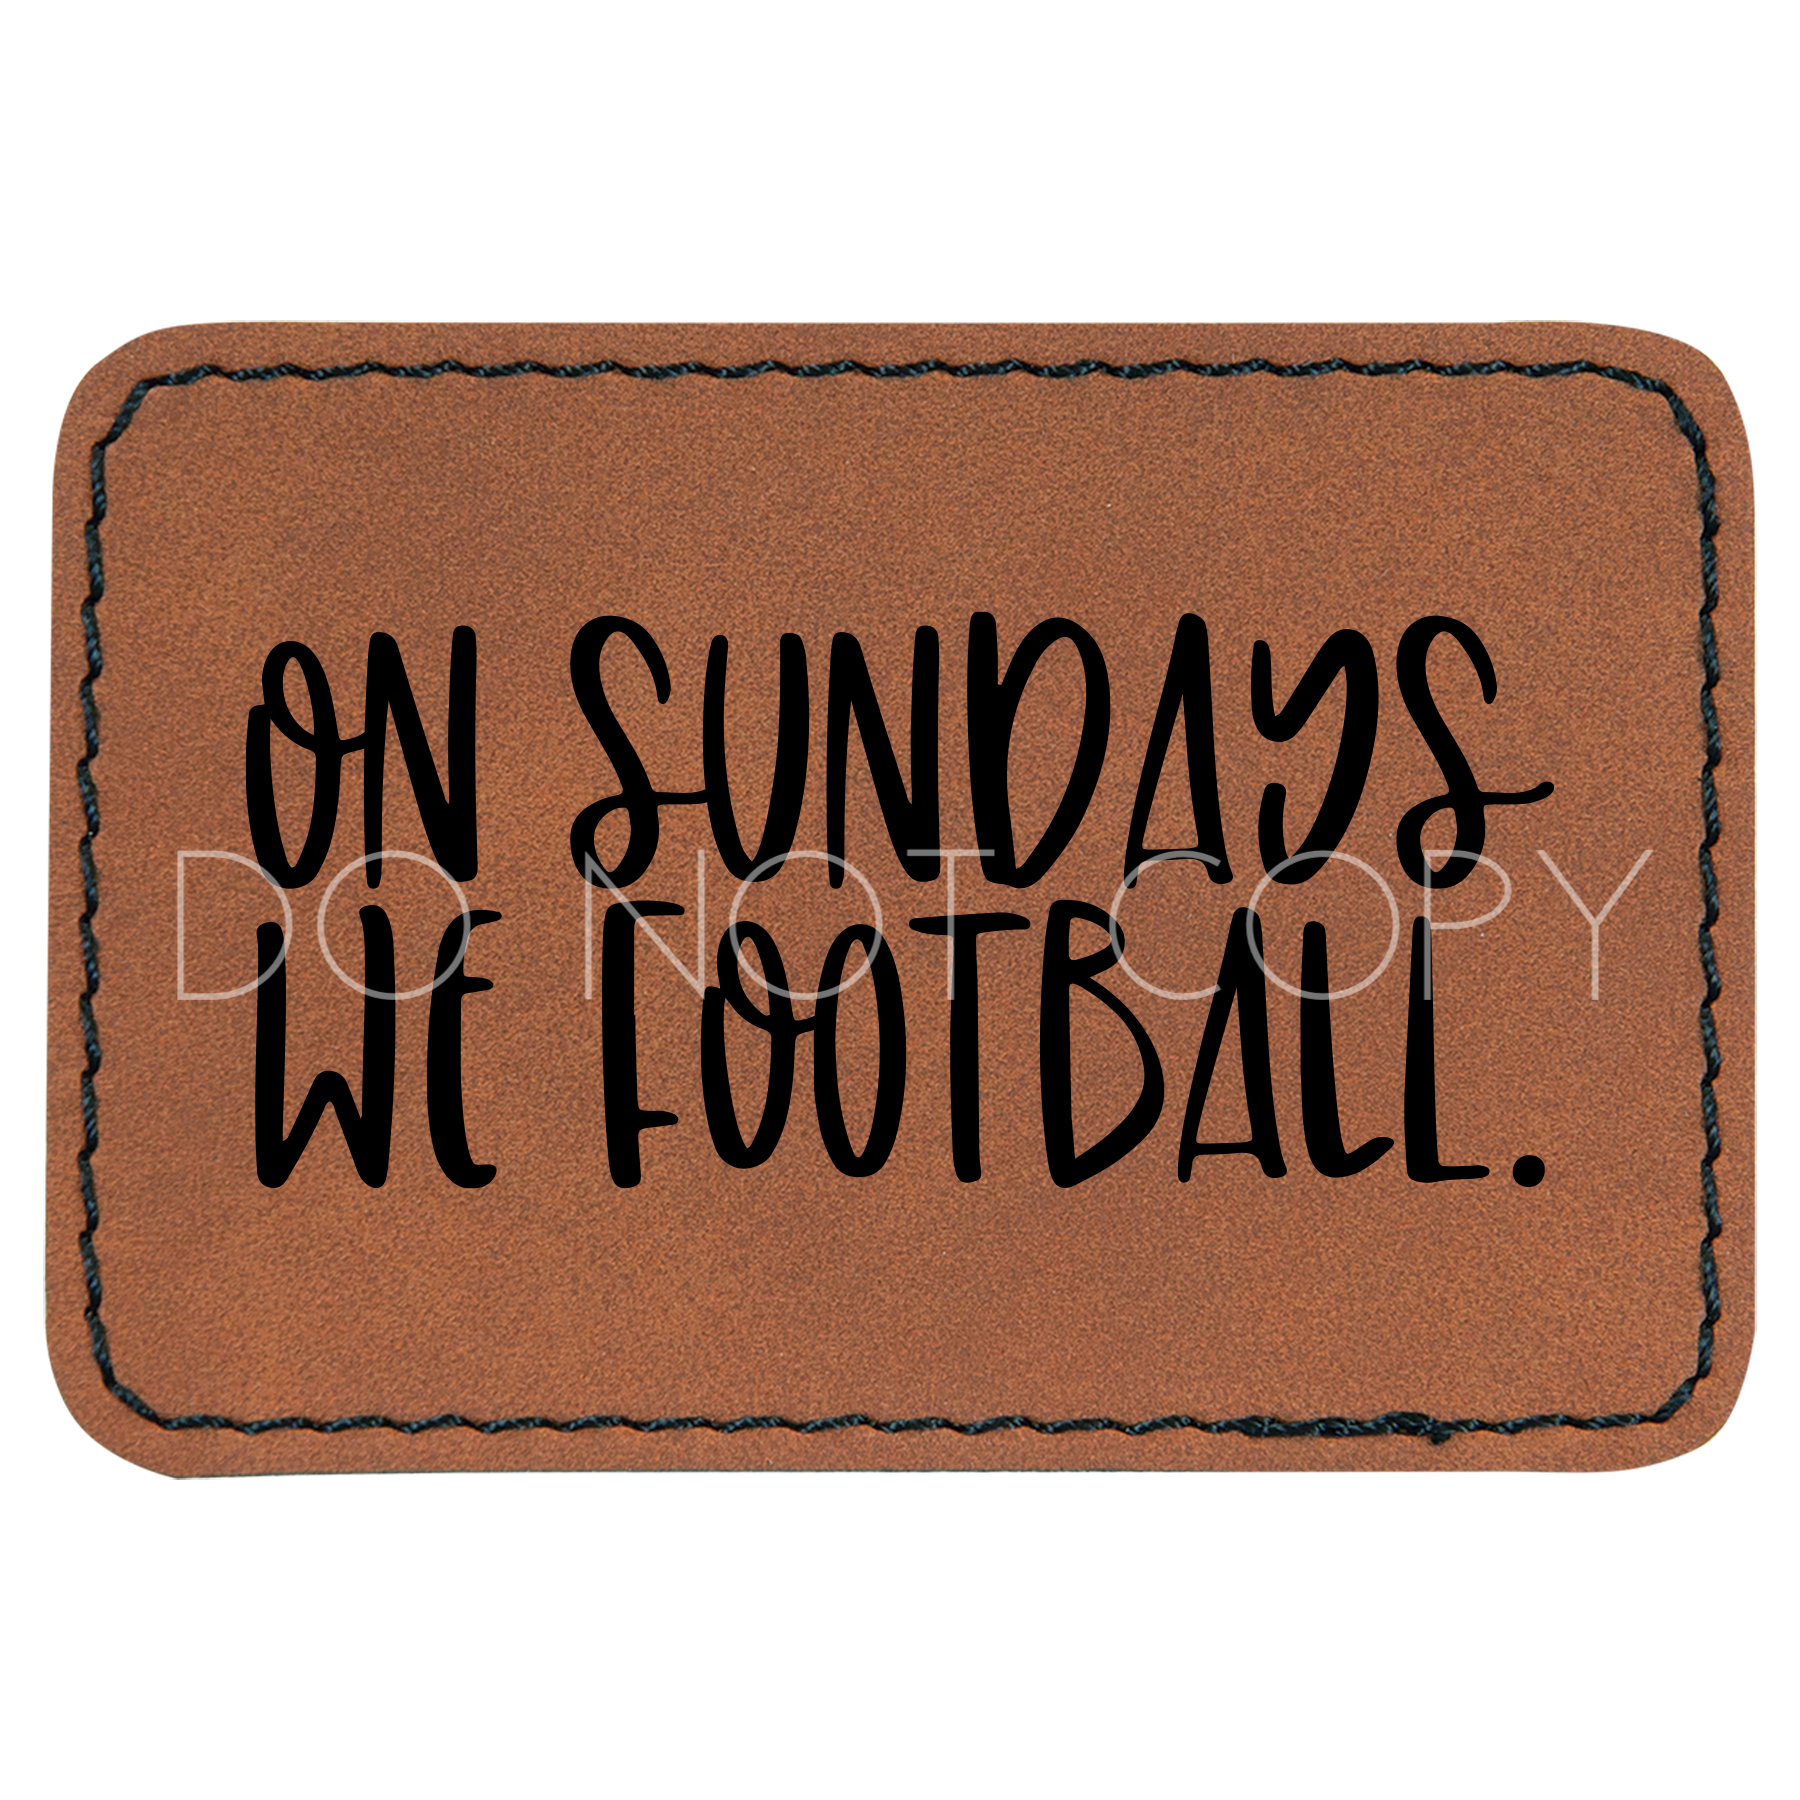 On Sundays We Football Patch